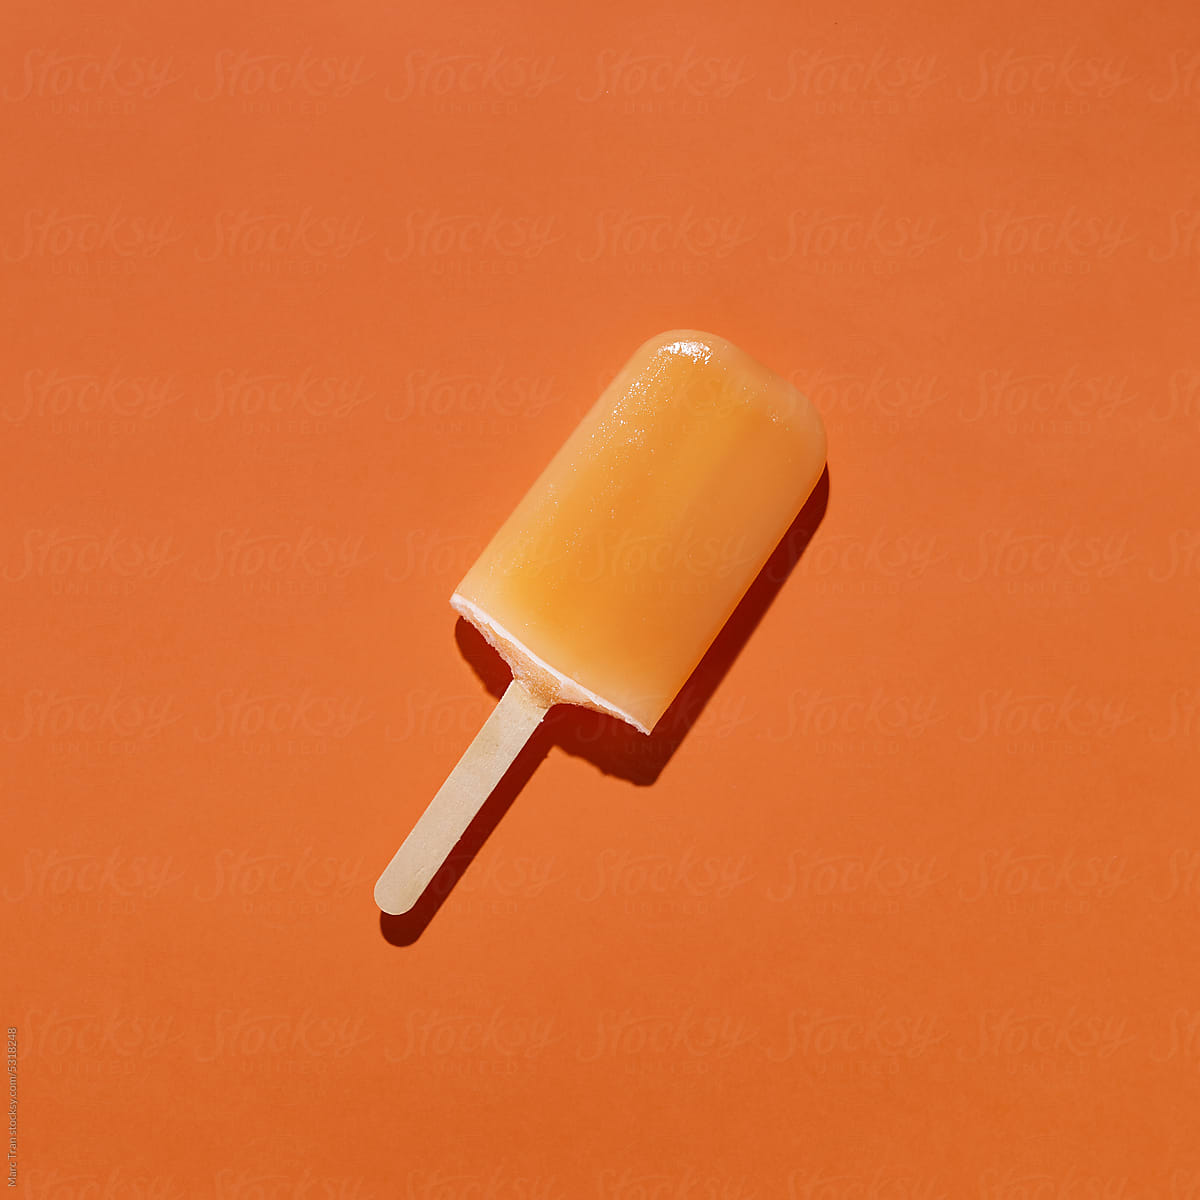 Tasty and refreshing popsicles on orange background